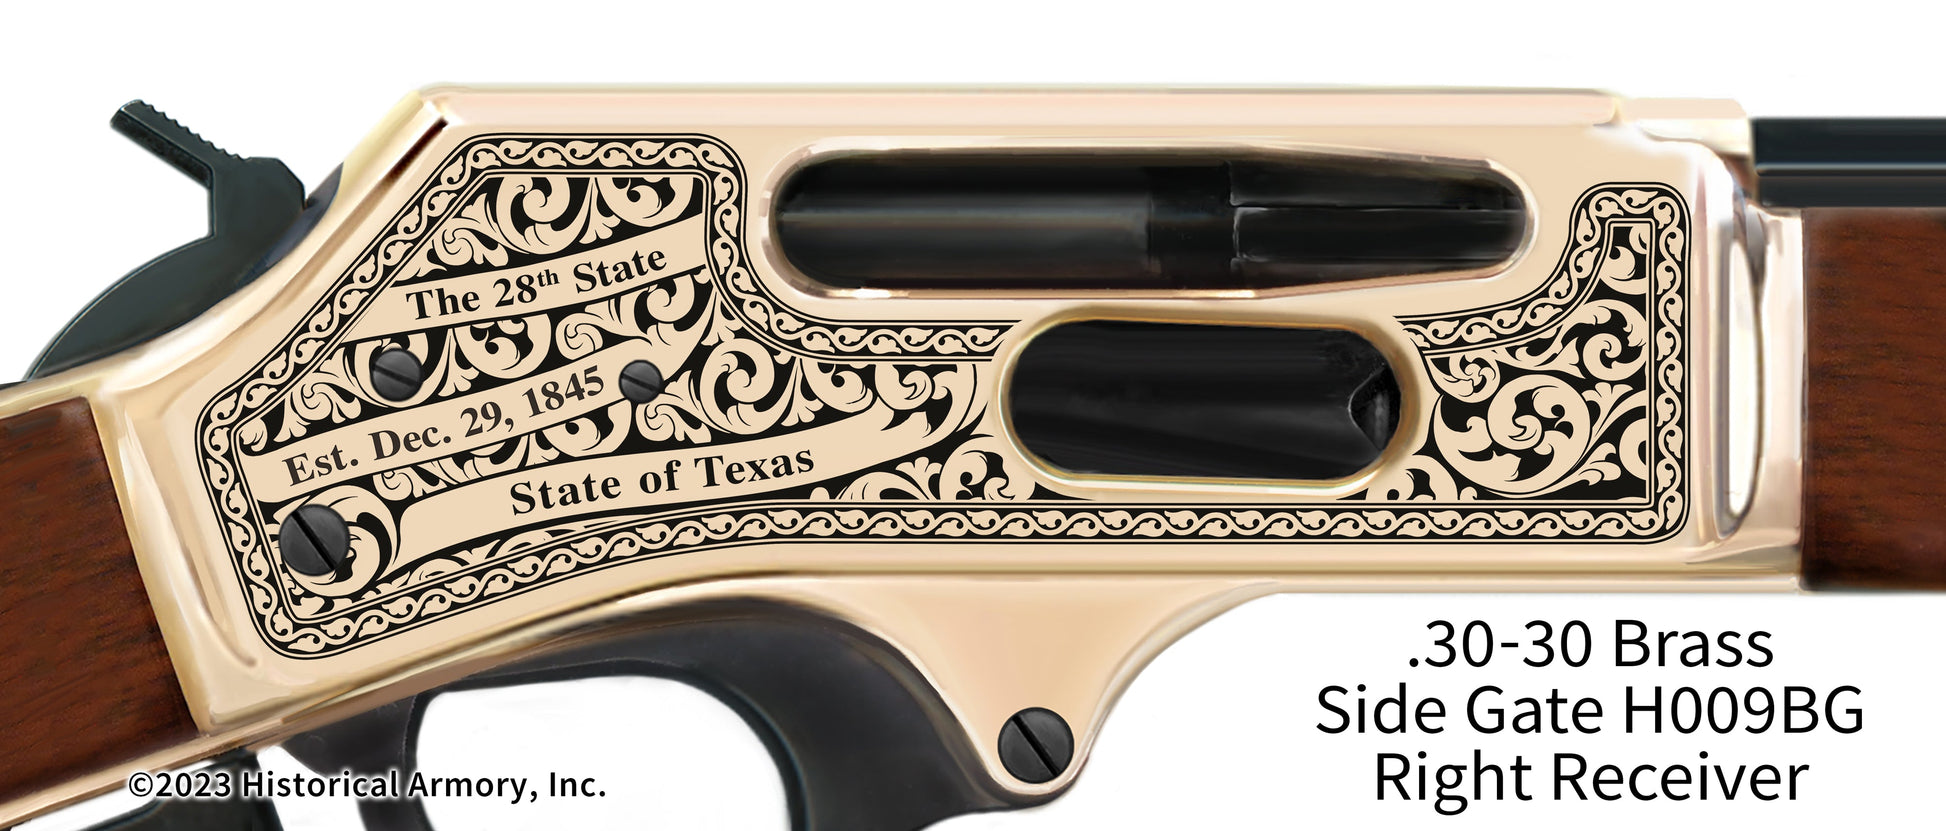 Hood County Texas History Engraved Henry .30-30 Rifle